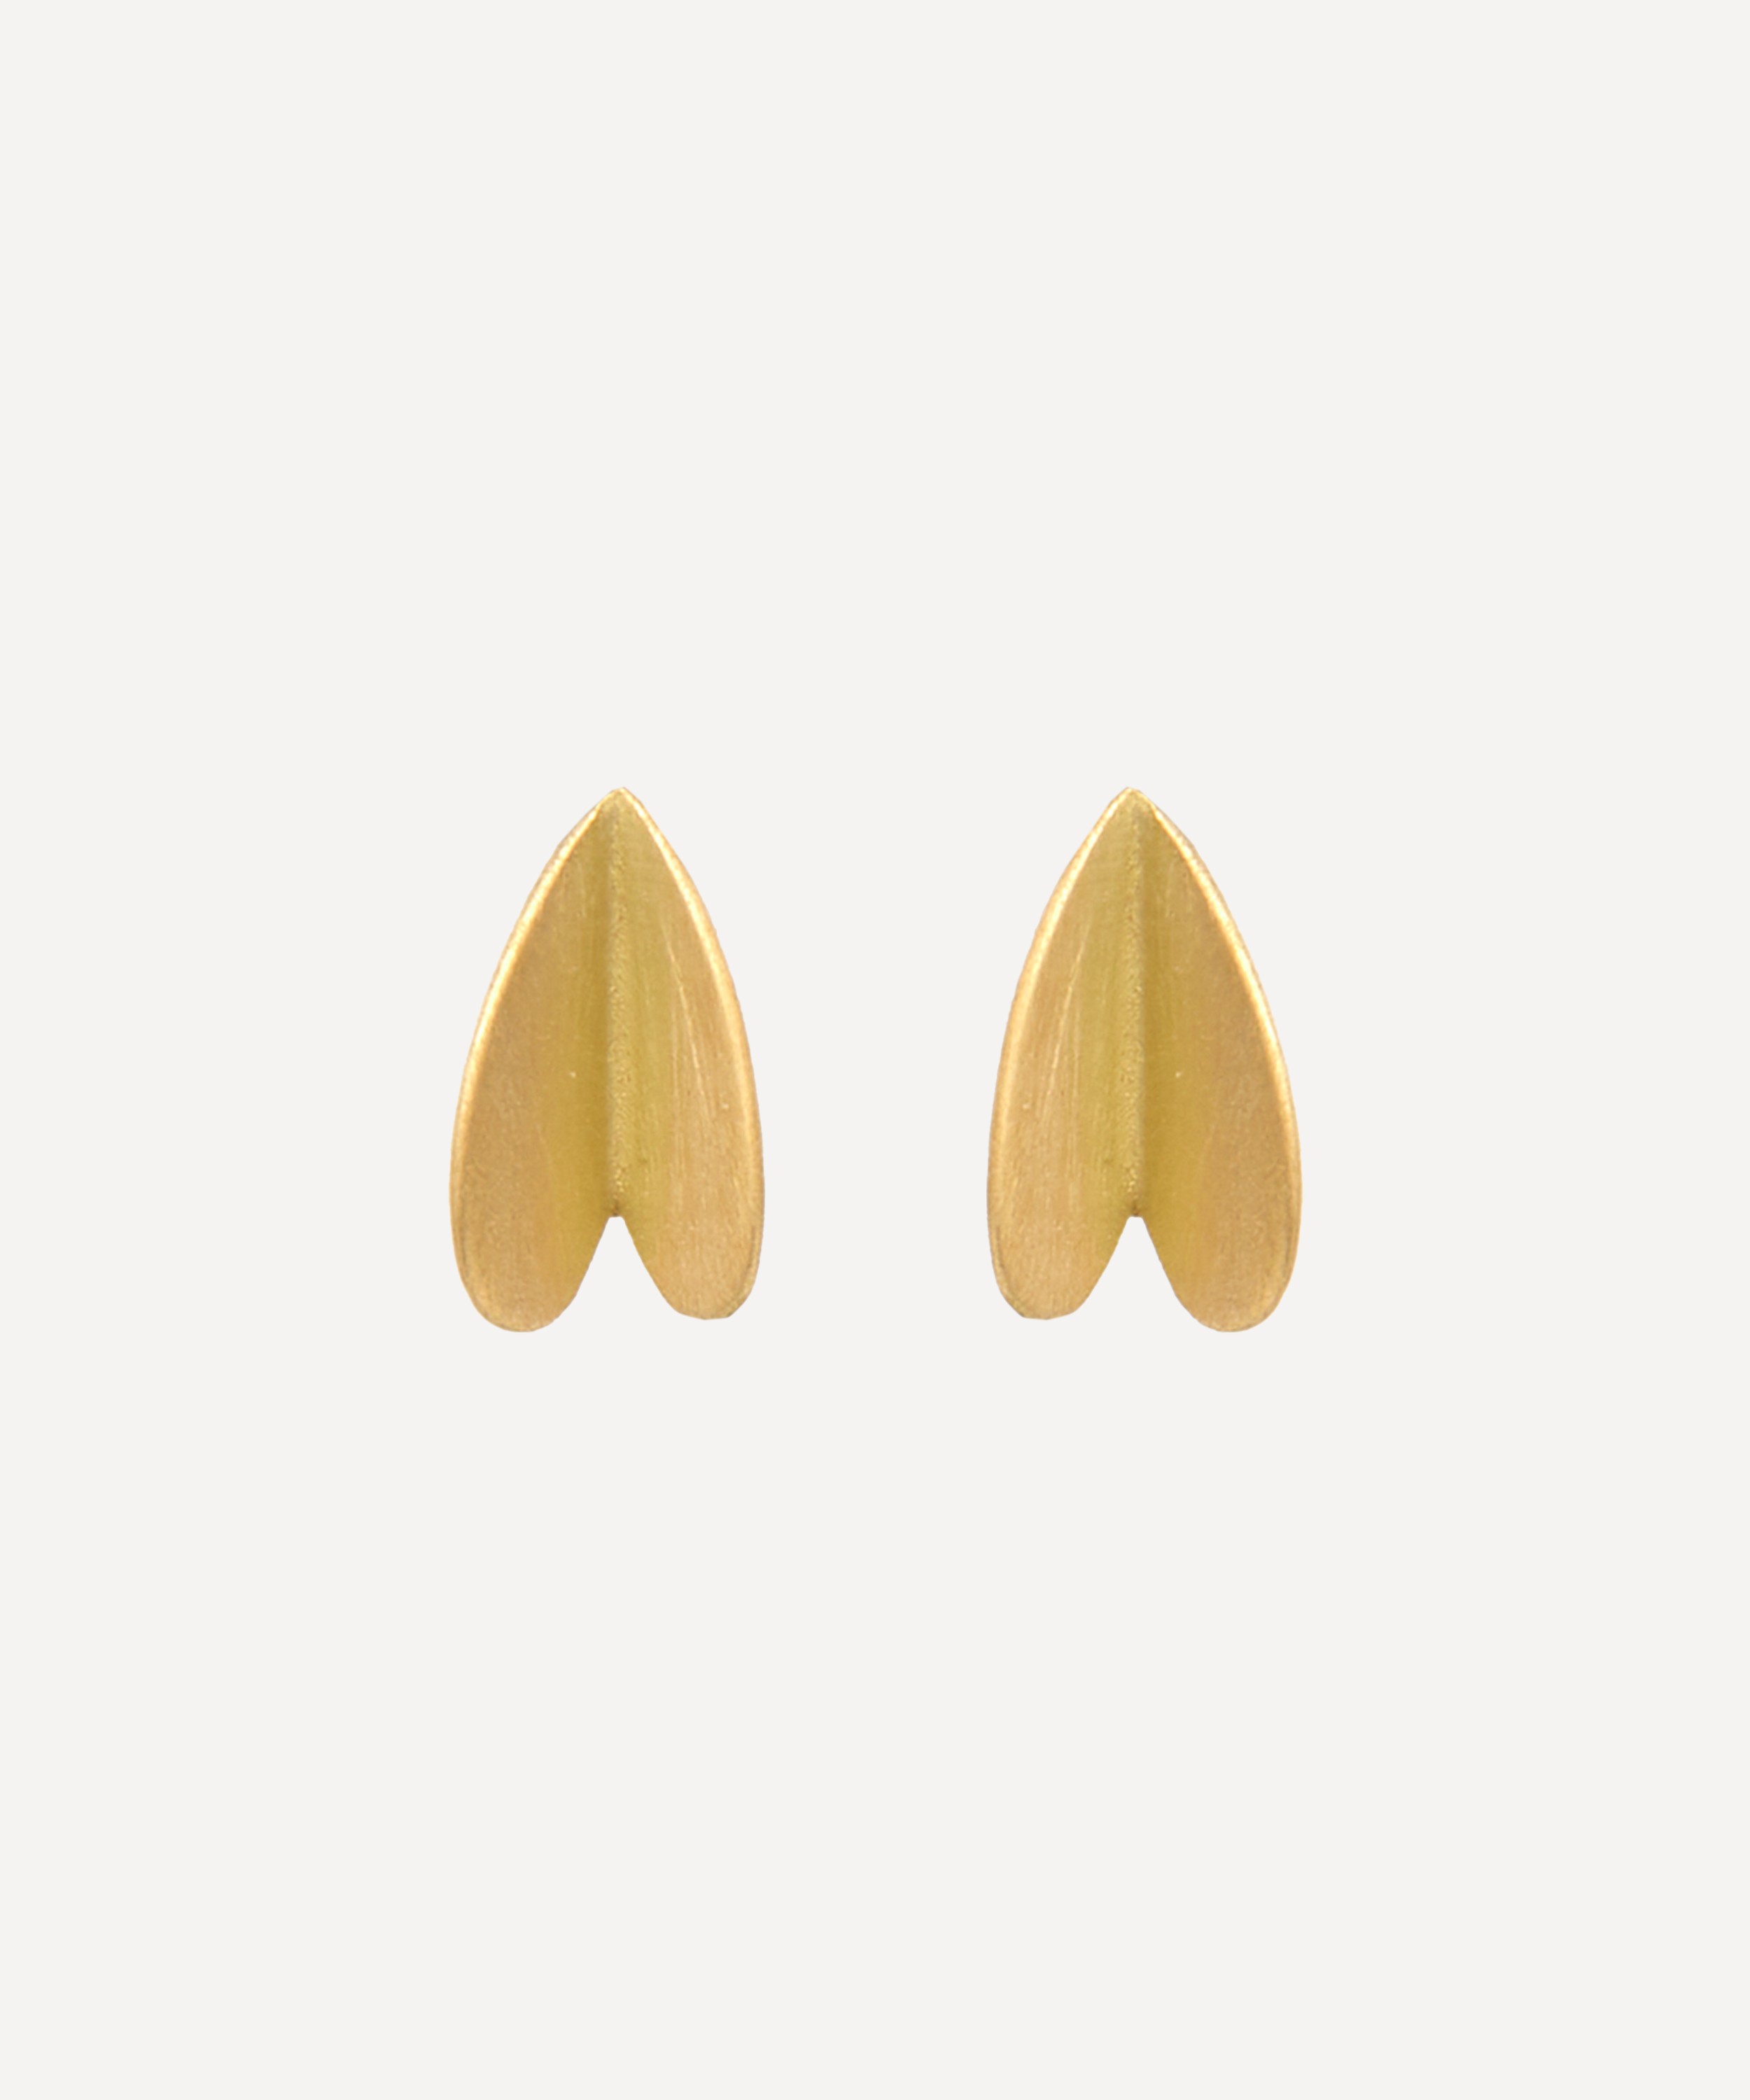 Sia Taylor - 18ct Gold Medium Wings Stud Earrings